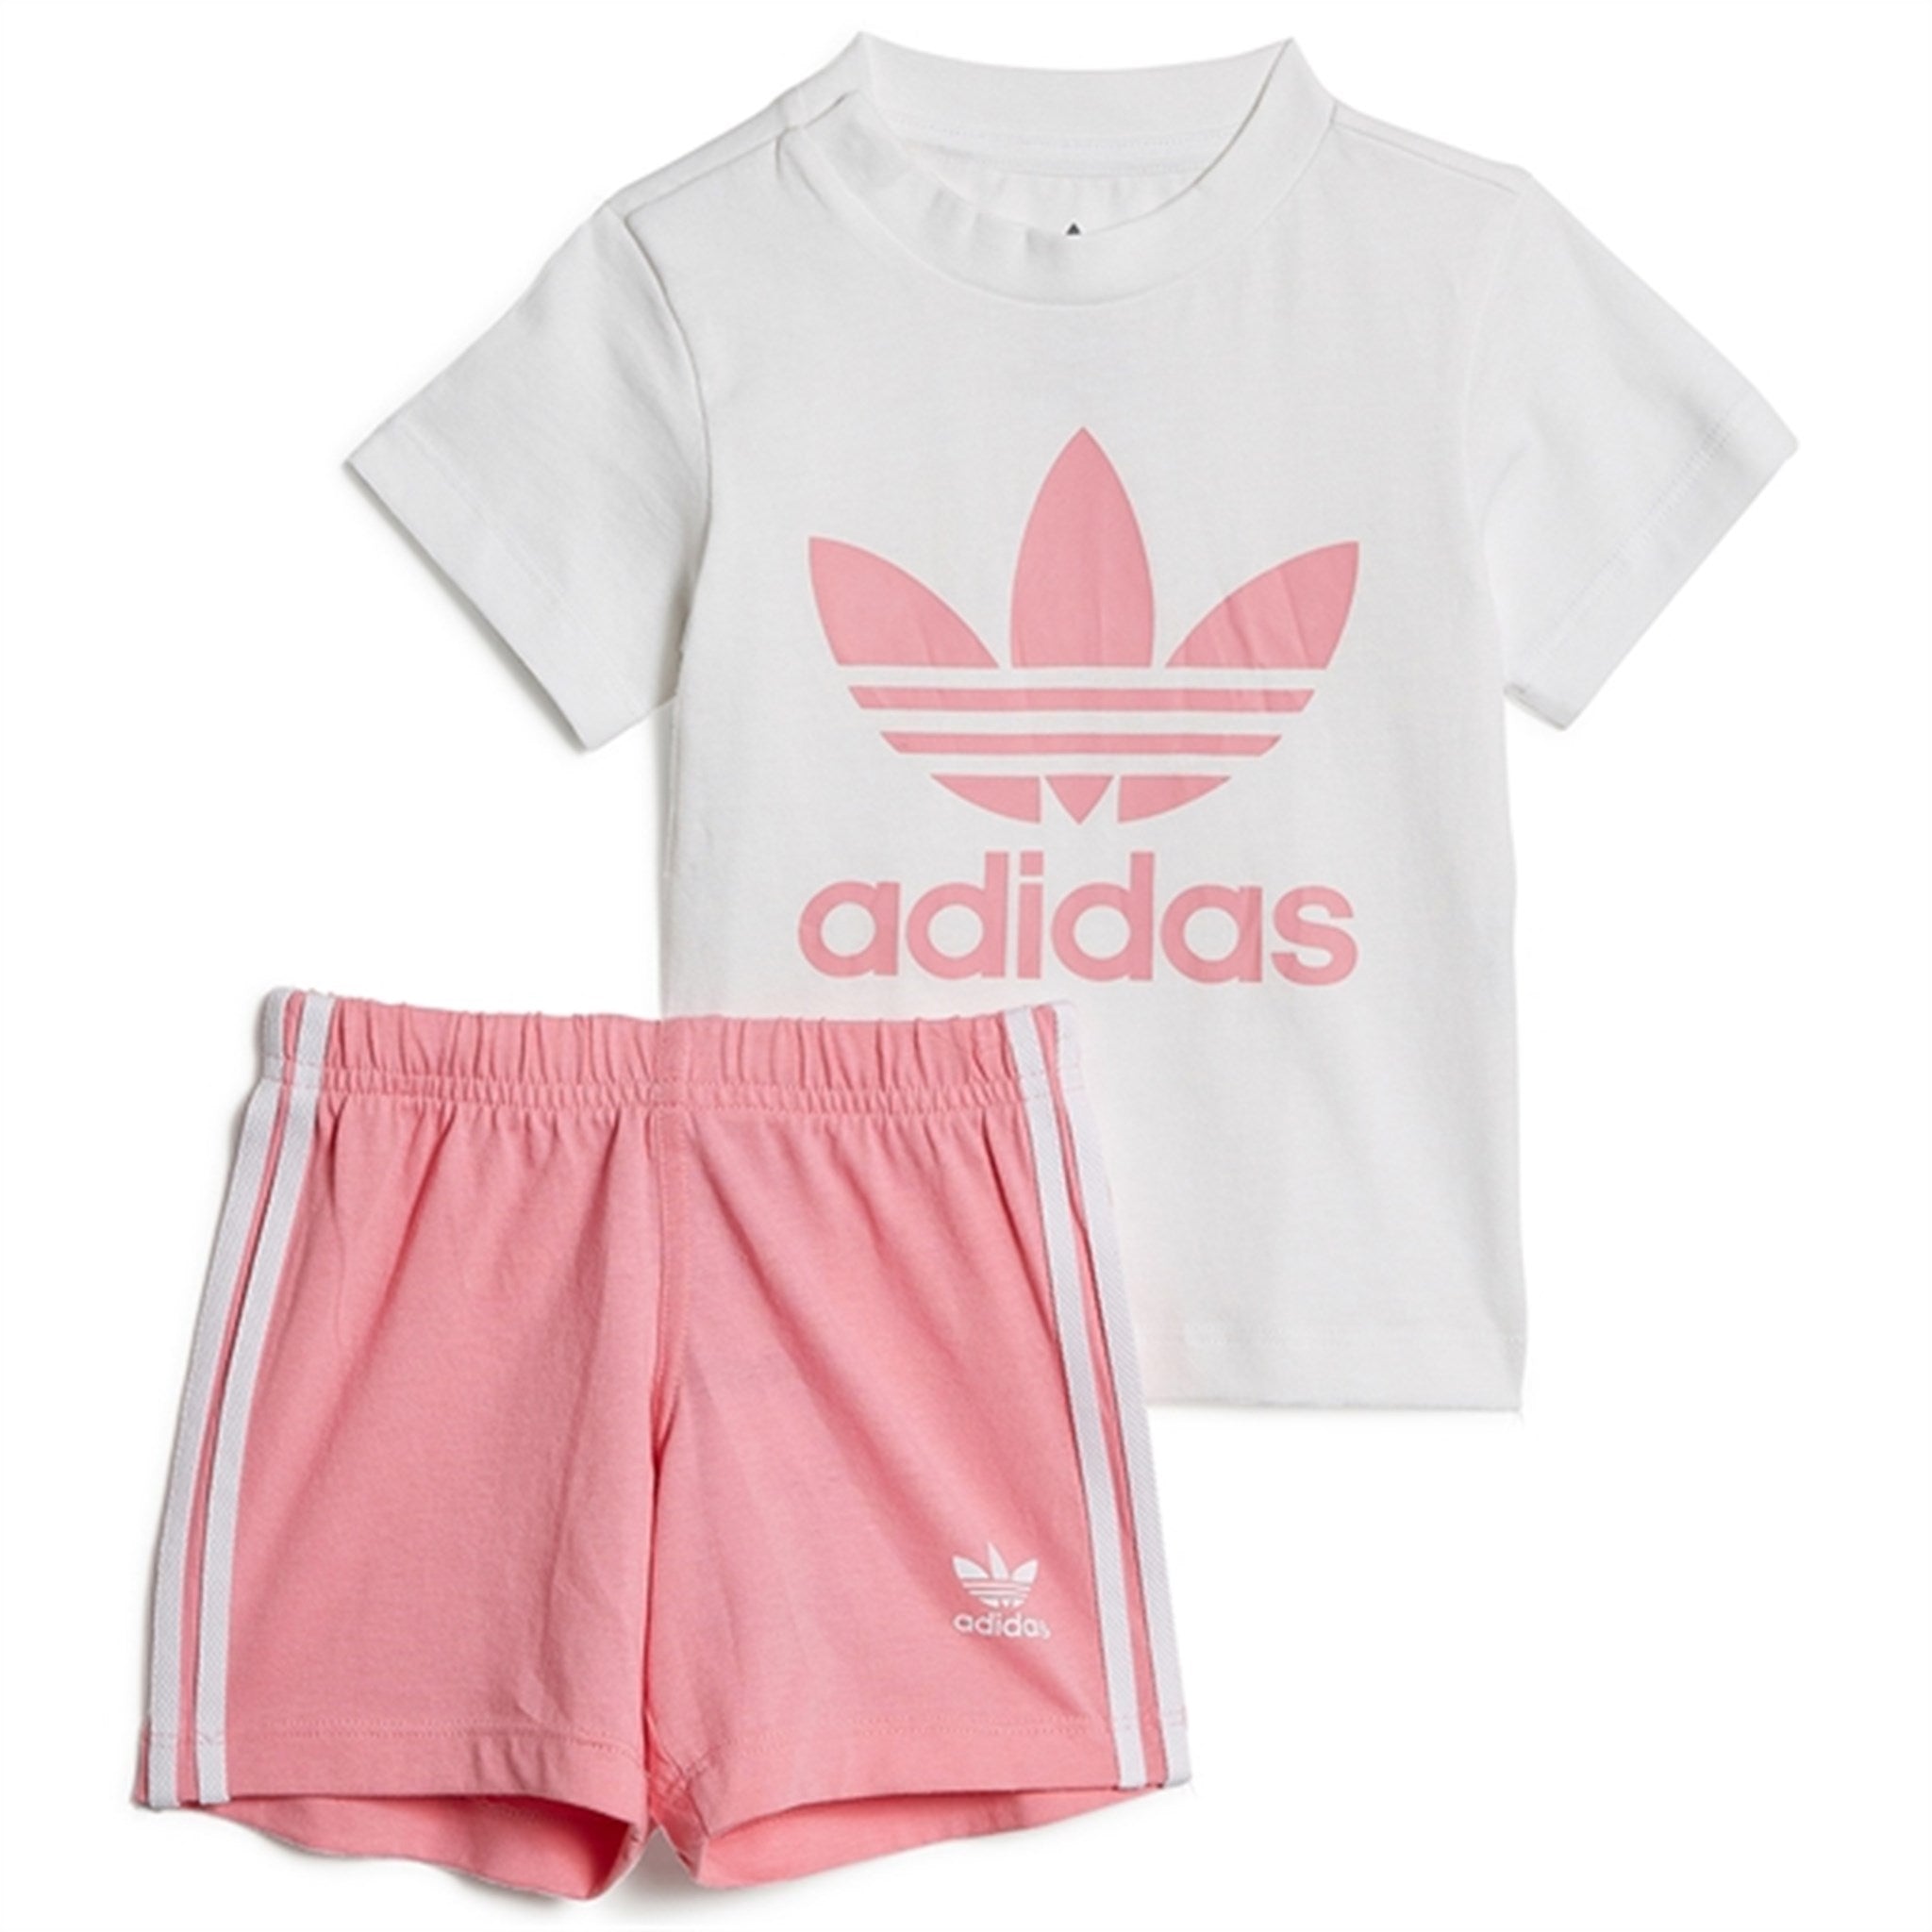 adidas Originals White / Pink Shorts Tee Sett